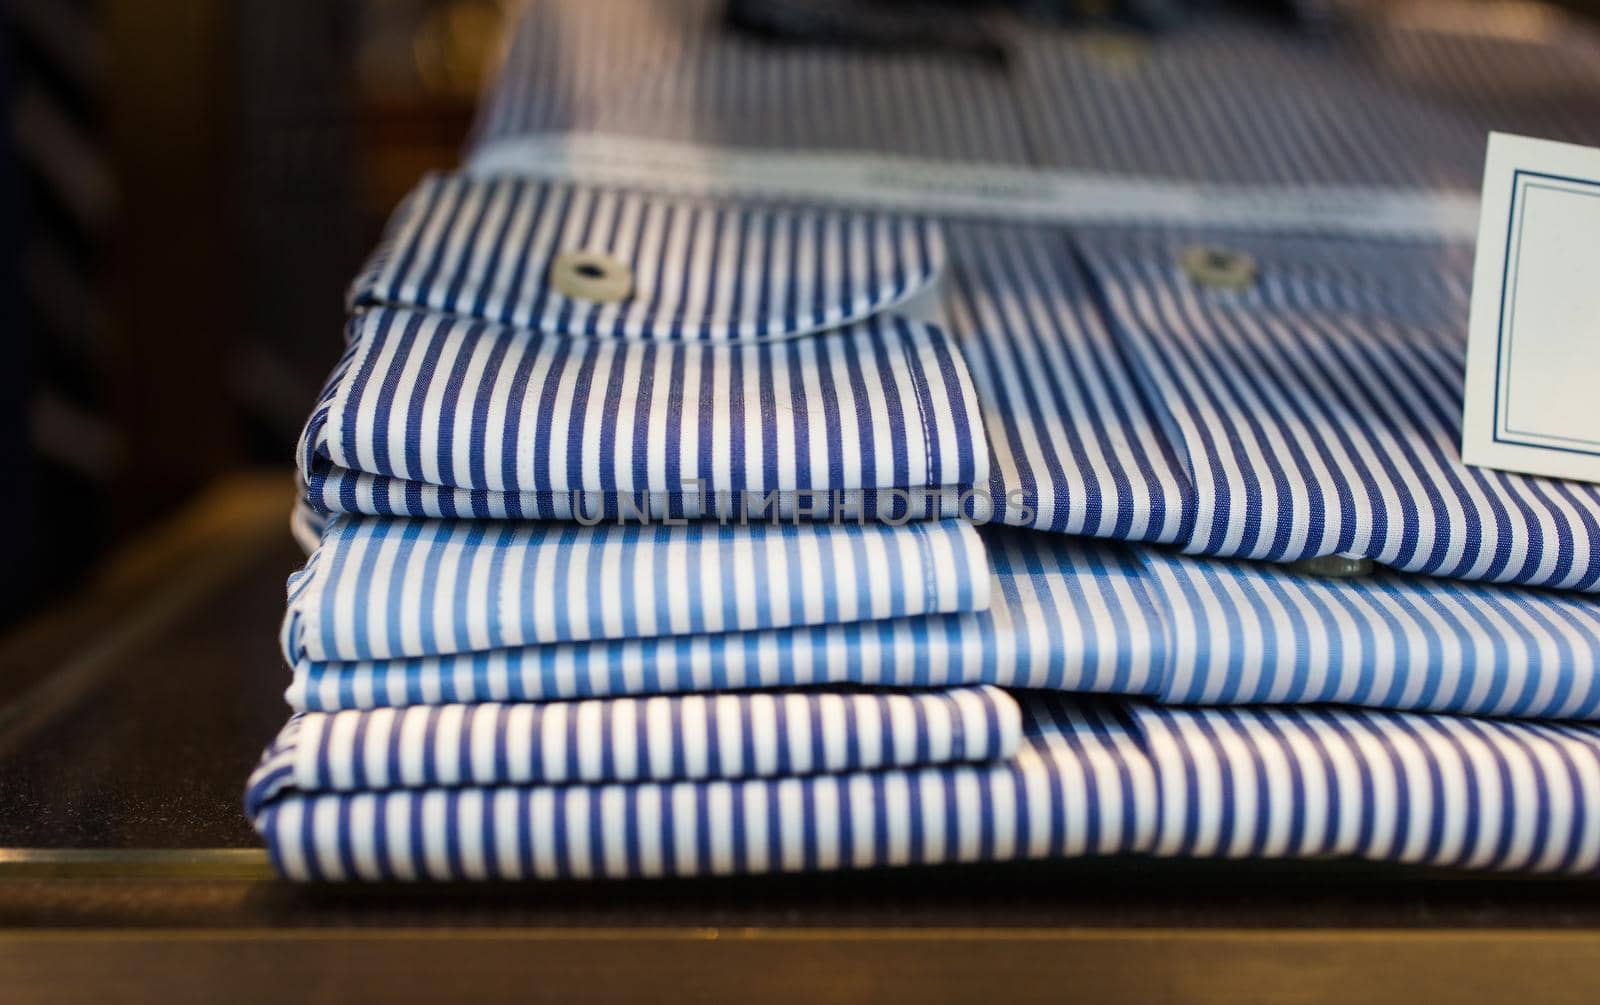 Close up of striped elegant male shirts